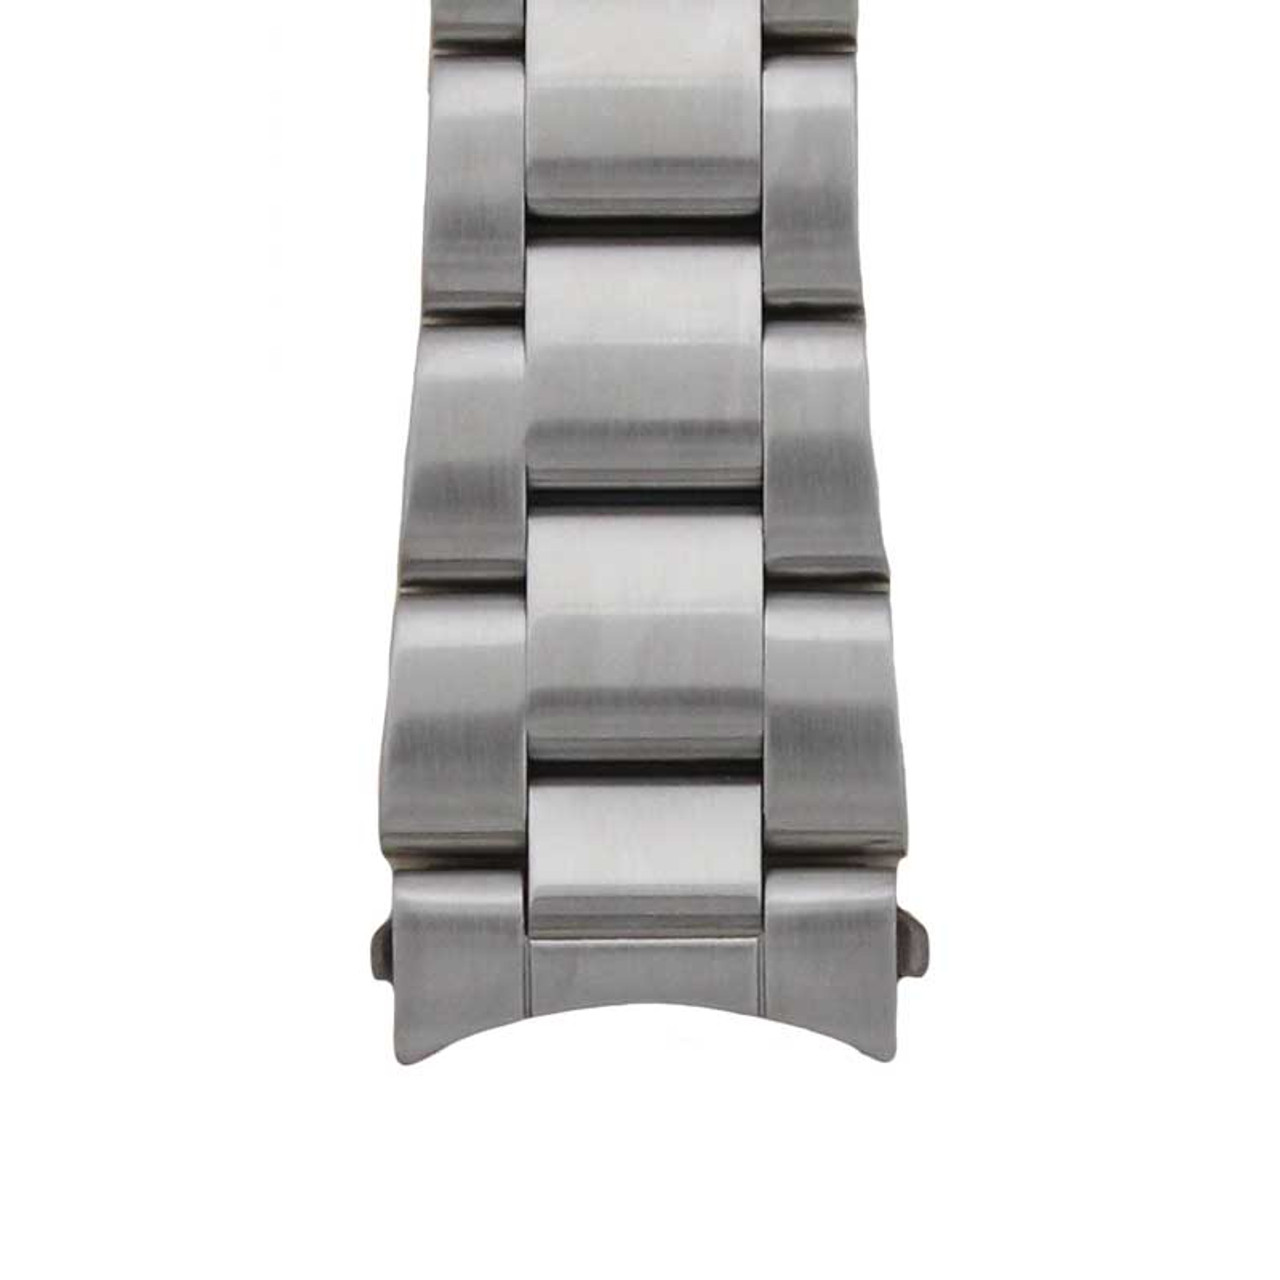 22/20mm Solid Stainless Steel Link Bracelet Wrist Watch Band Men